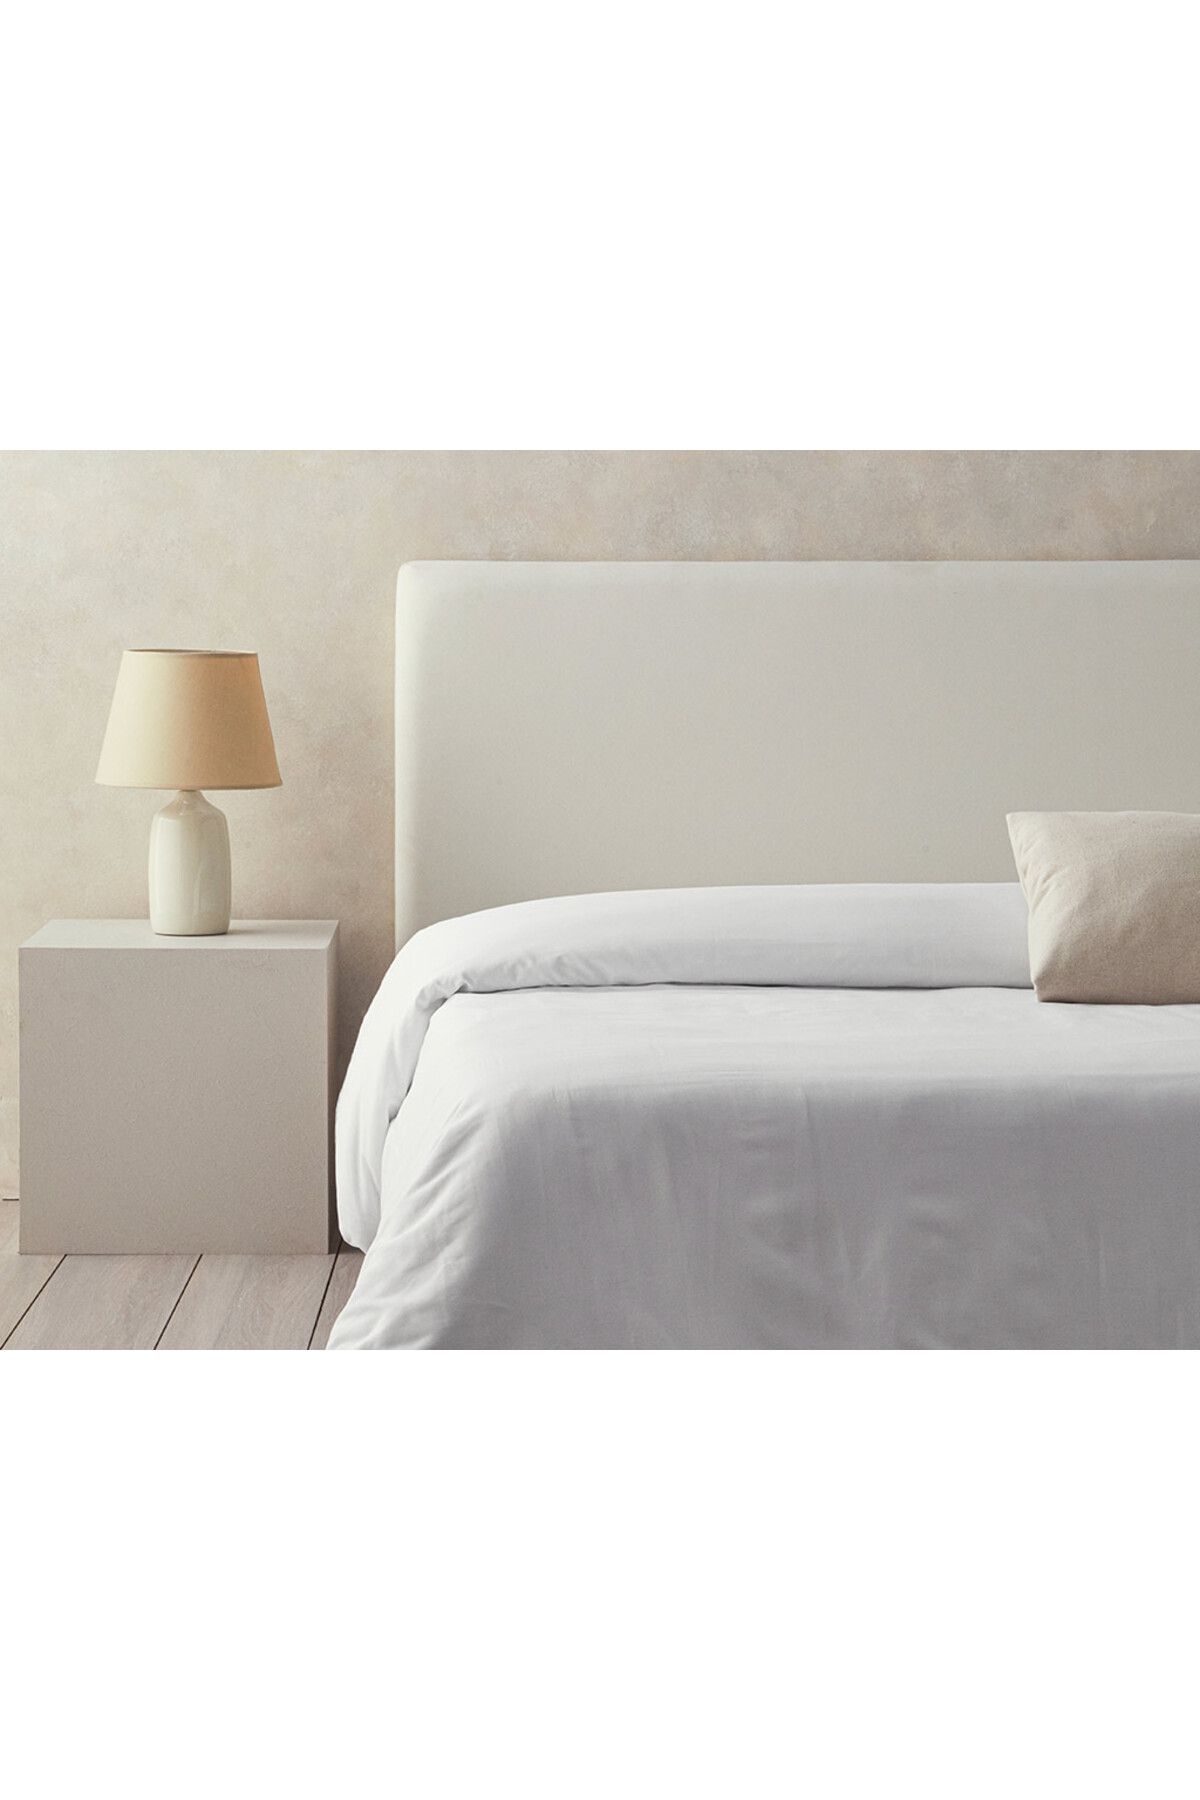 English Home Novella Premium Soft Cotton Çift Kişilik Nevresim 200x220 Cm Beyaz